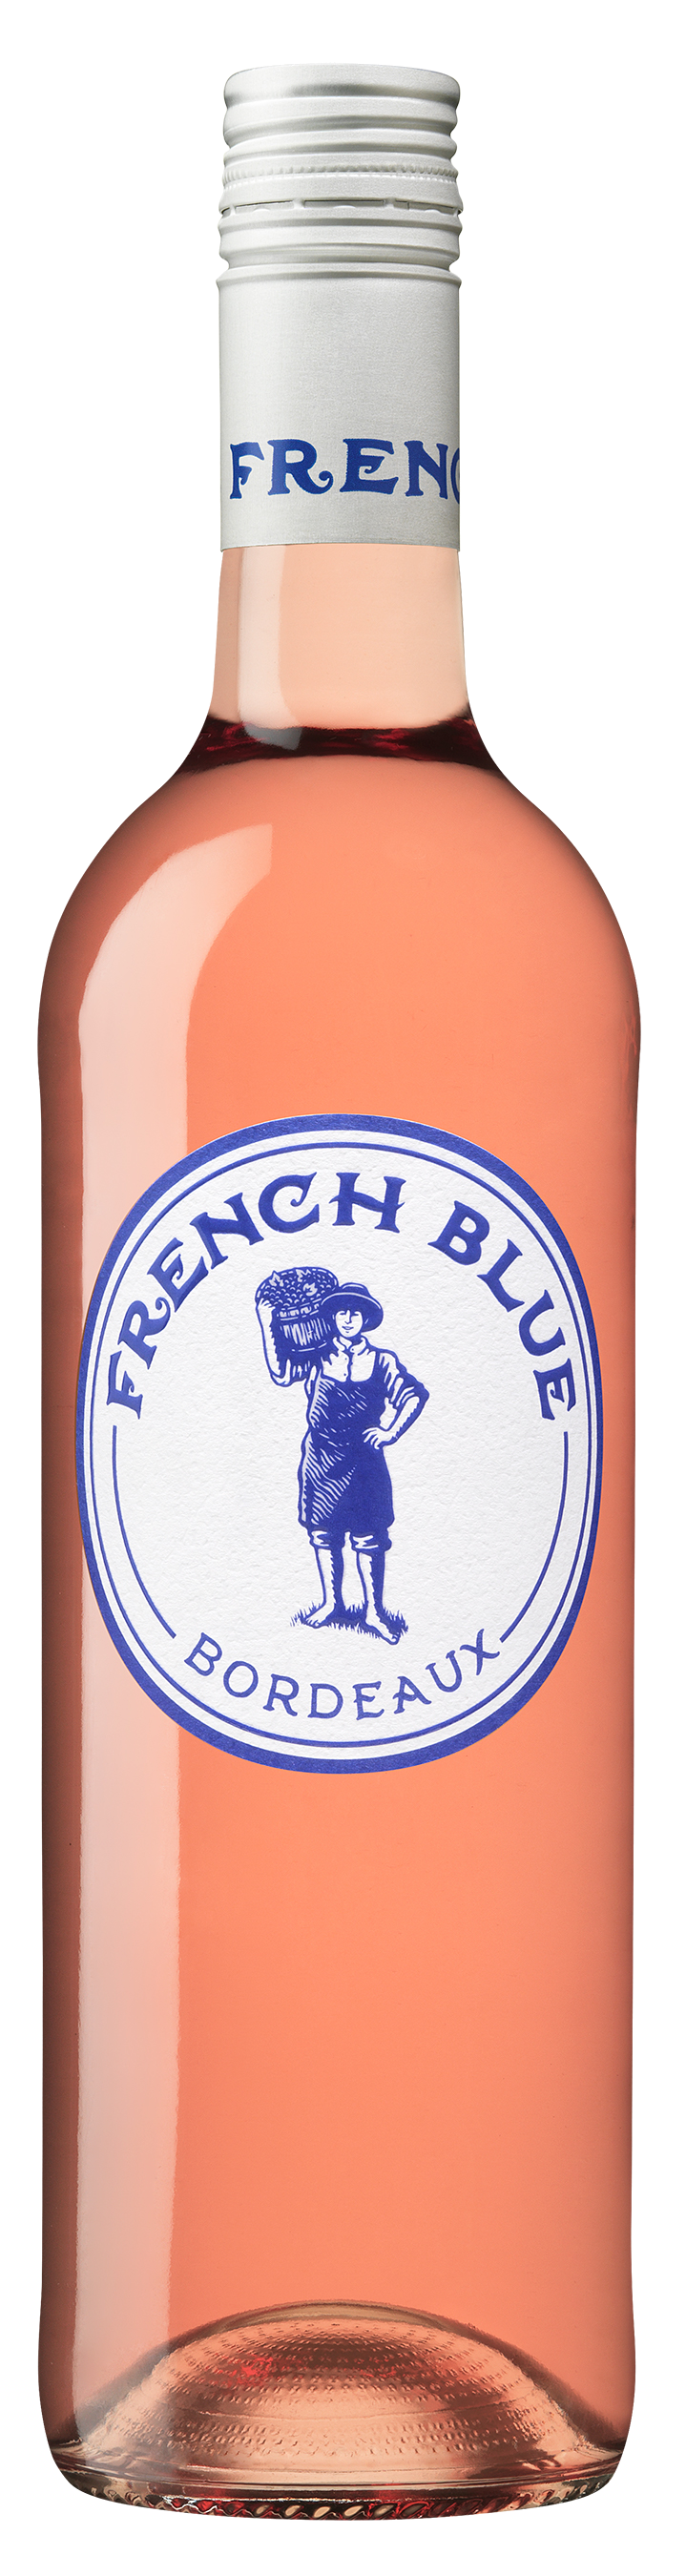 French Blue 2019 Rose Bordeaux